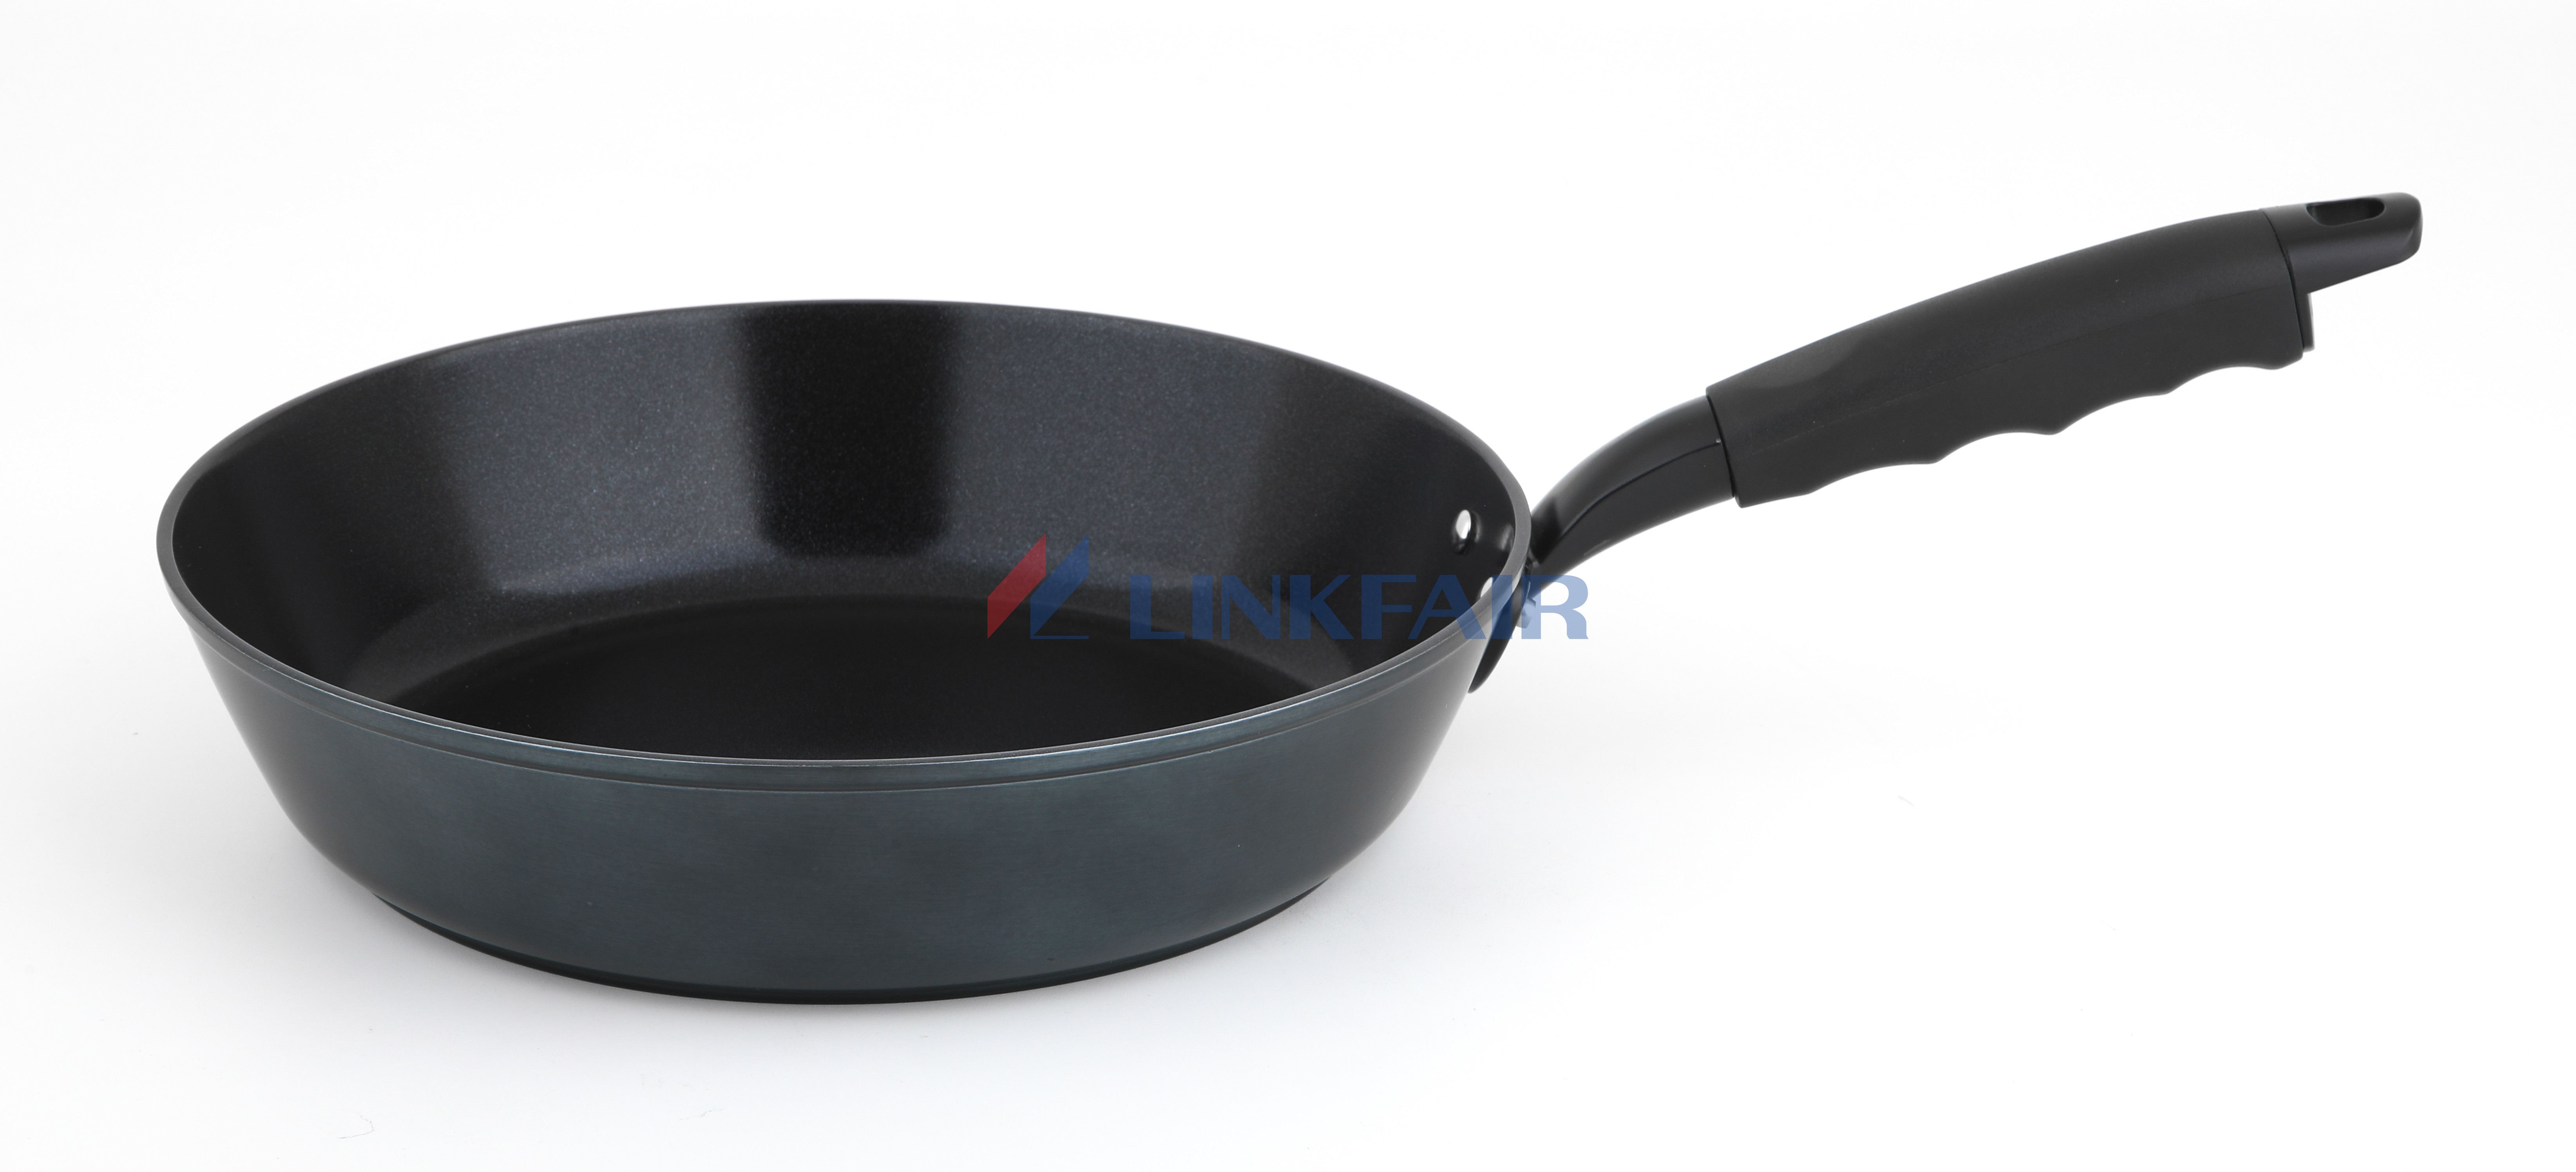 6-Piece Non Stick Cookwarer Set with Metalic Black Exterior